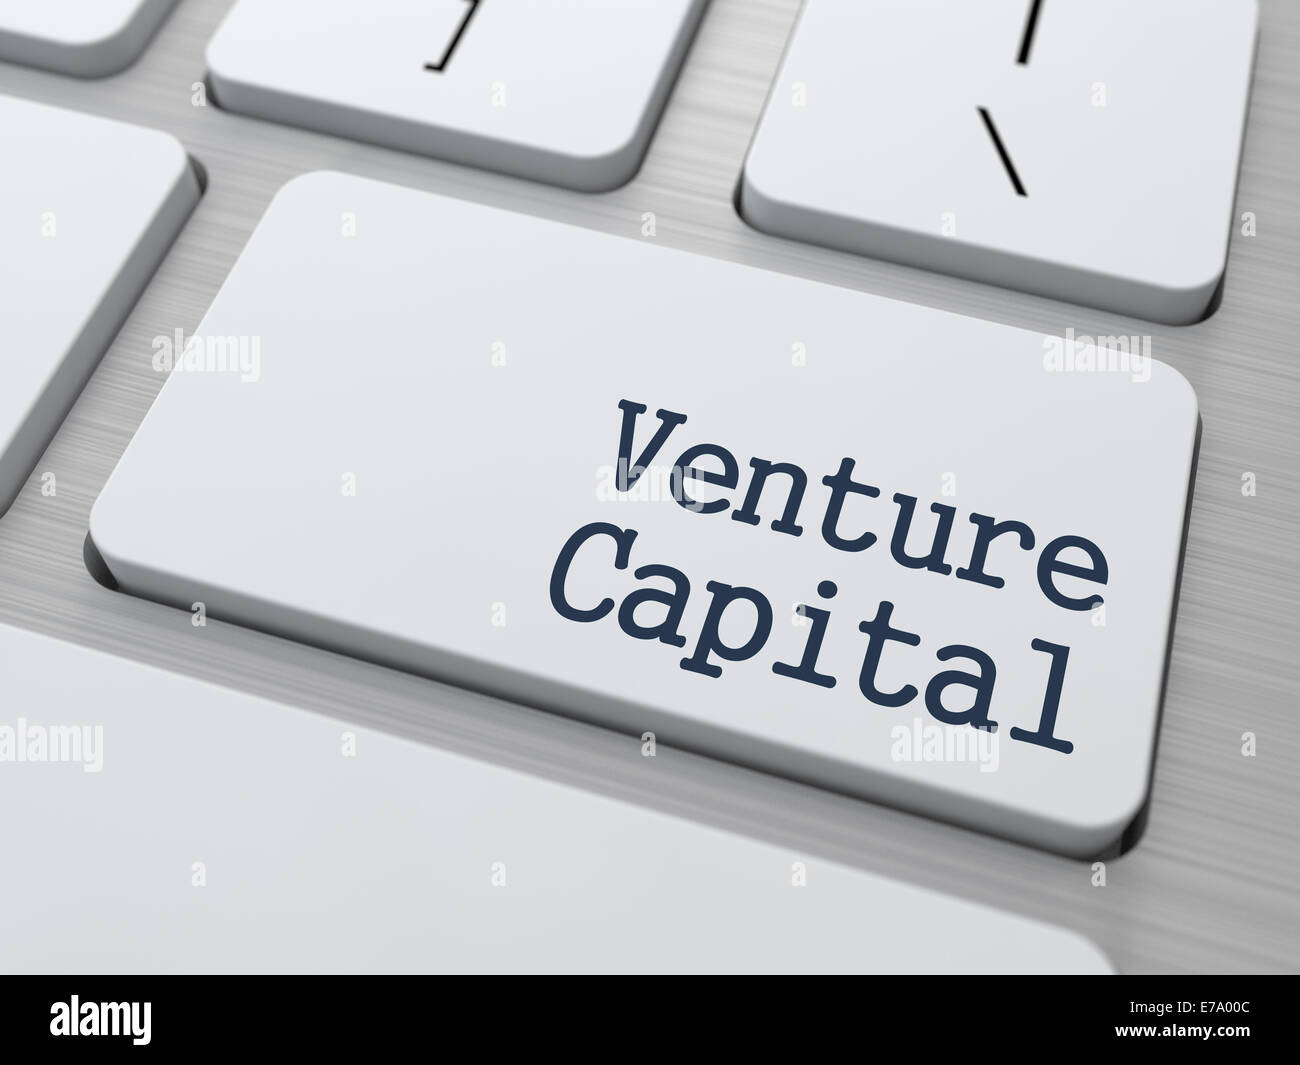 Venture Capital on Keyboard Button. Stock Photo